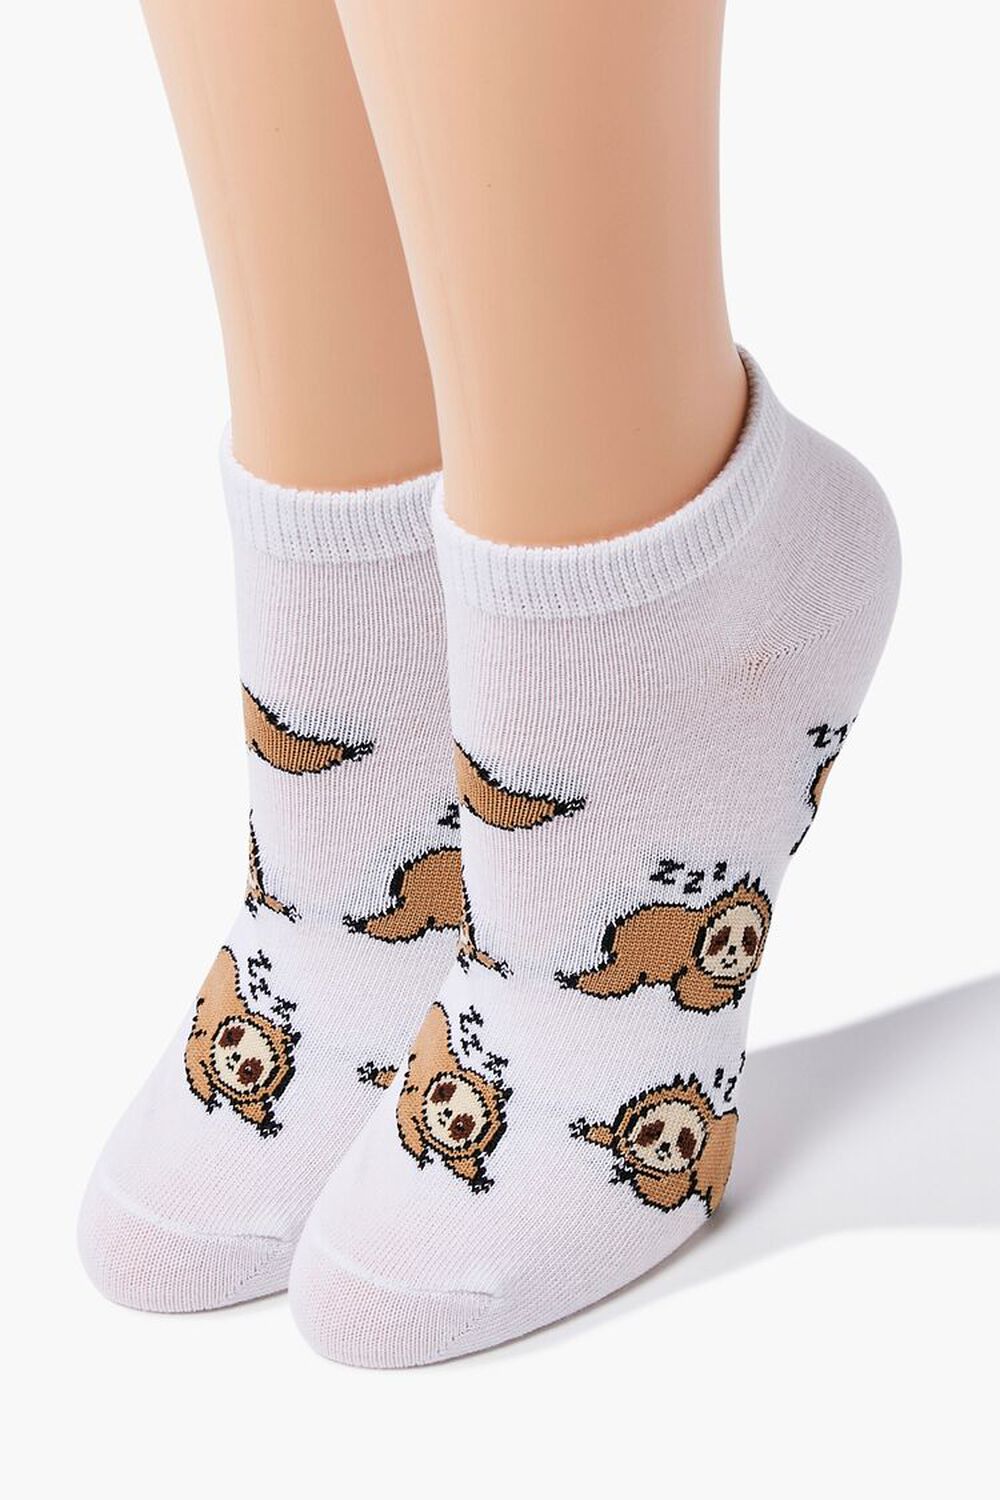 WHITE/MULTI Sleeping Sloth Print Socks, image 1